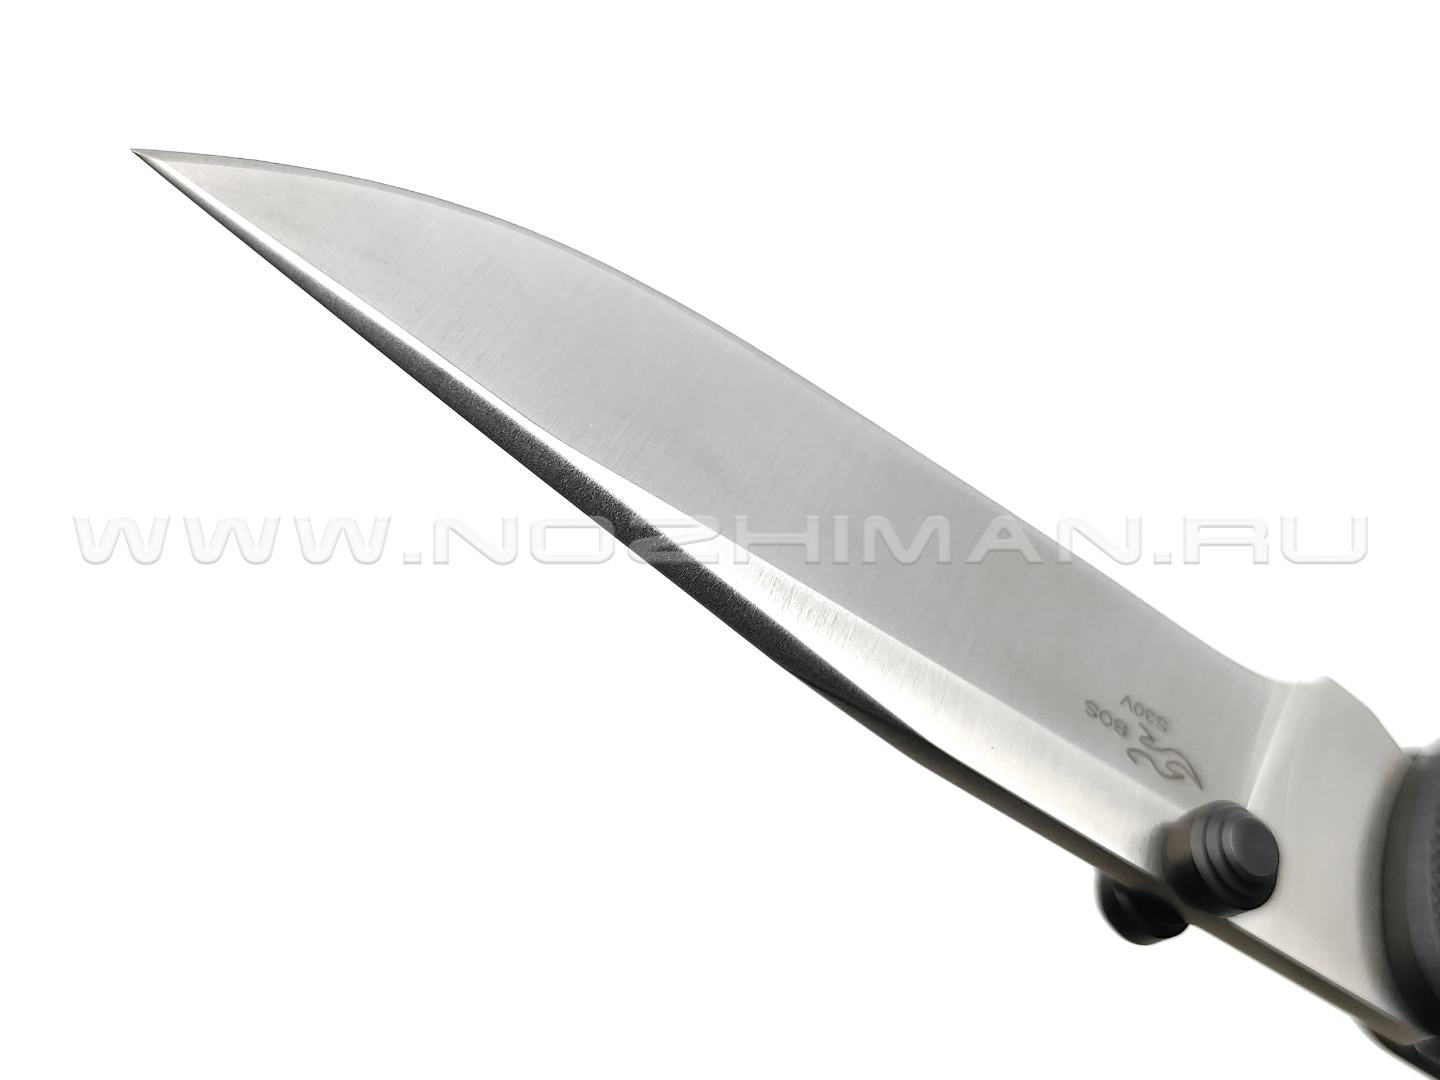 Нож Buck 110 Slim Pro TRX 0110BKS3 сталь S30V, рукоять G10 black